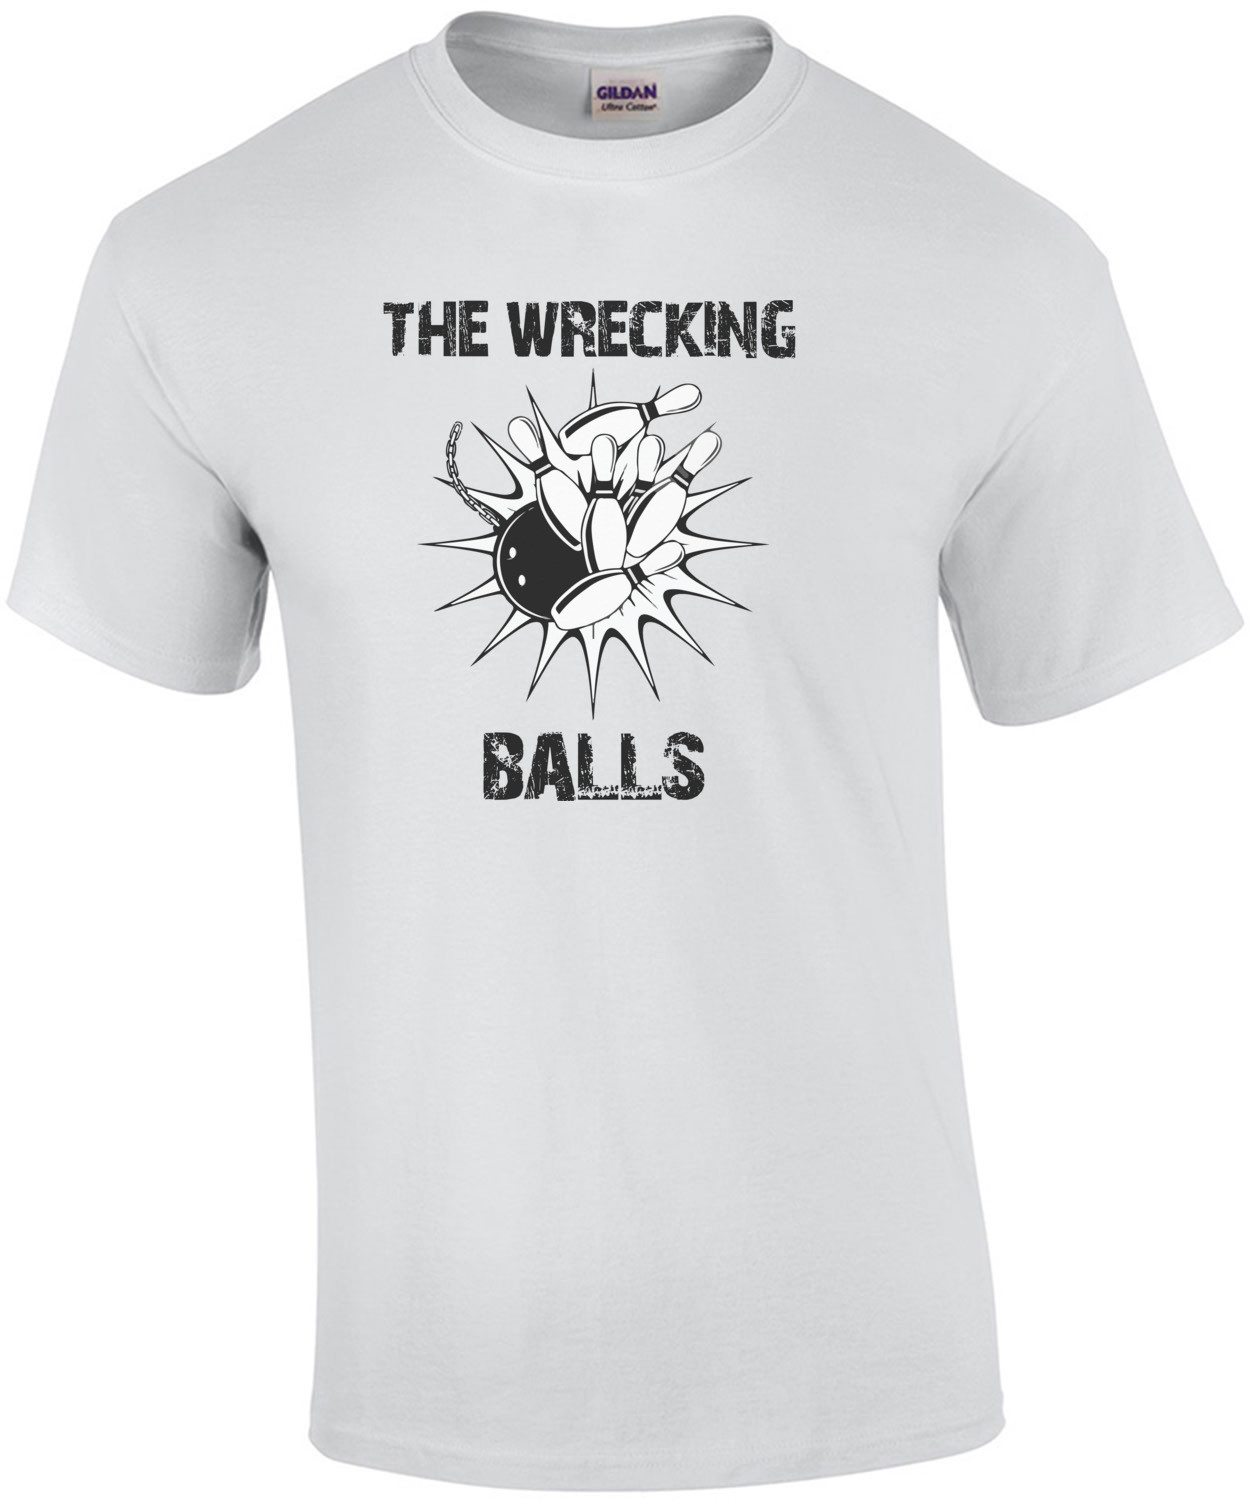 The Wrecking Balls - Funny Bowling League T-Shirt